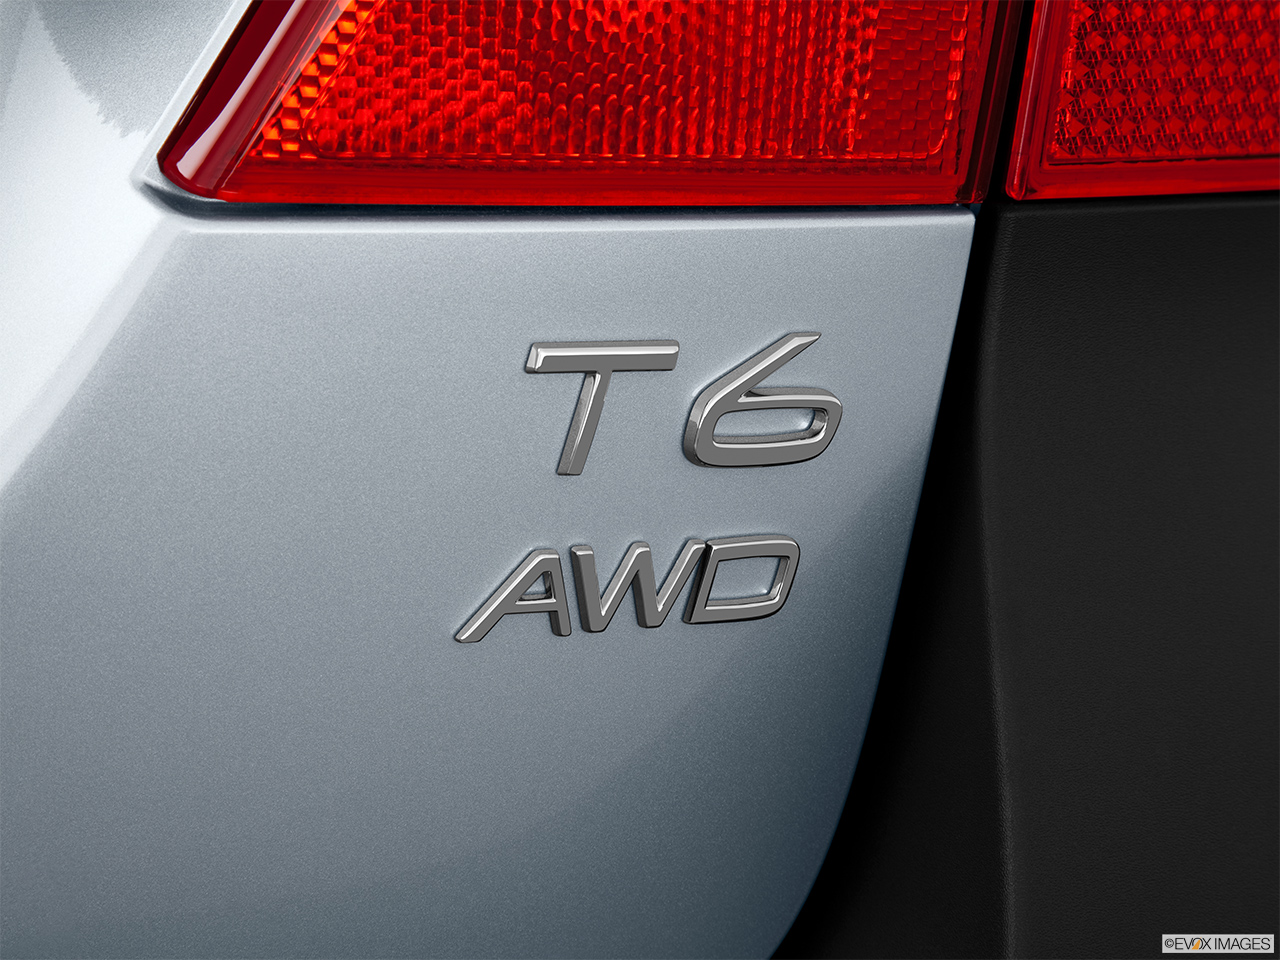 2013 Volvo XC70 T6 AWD Platinum Exterior Bonus Shots (no set spec) 